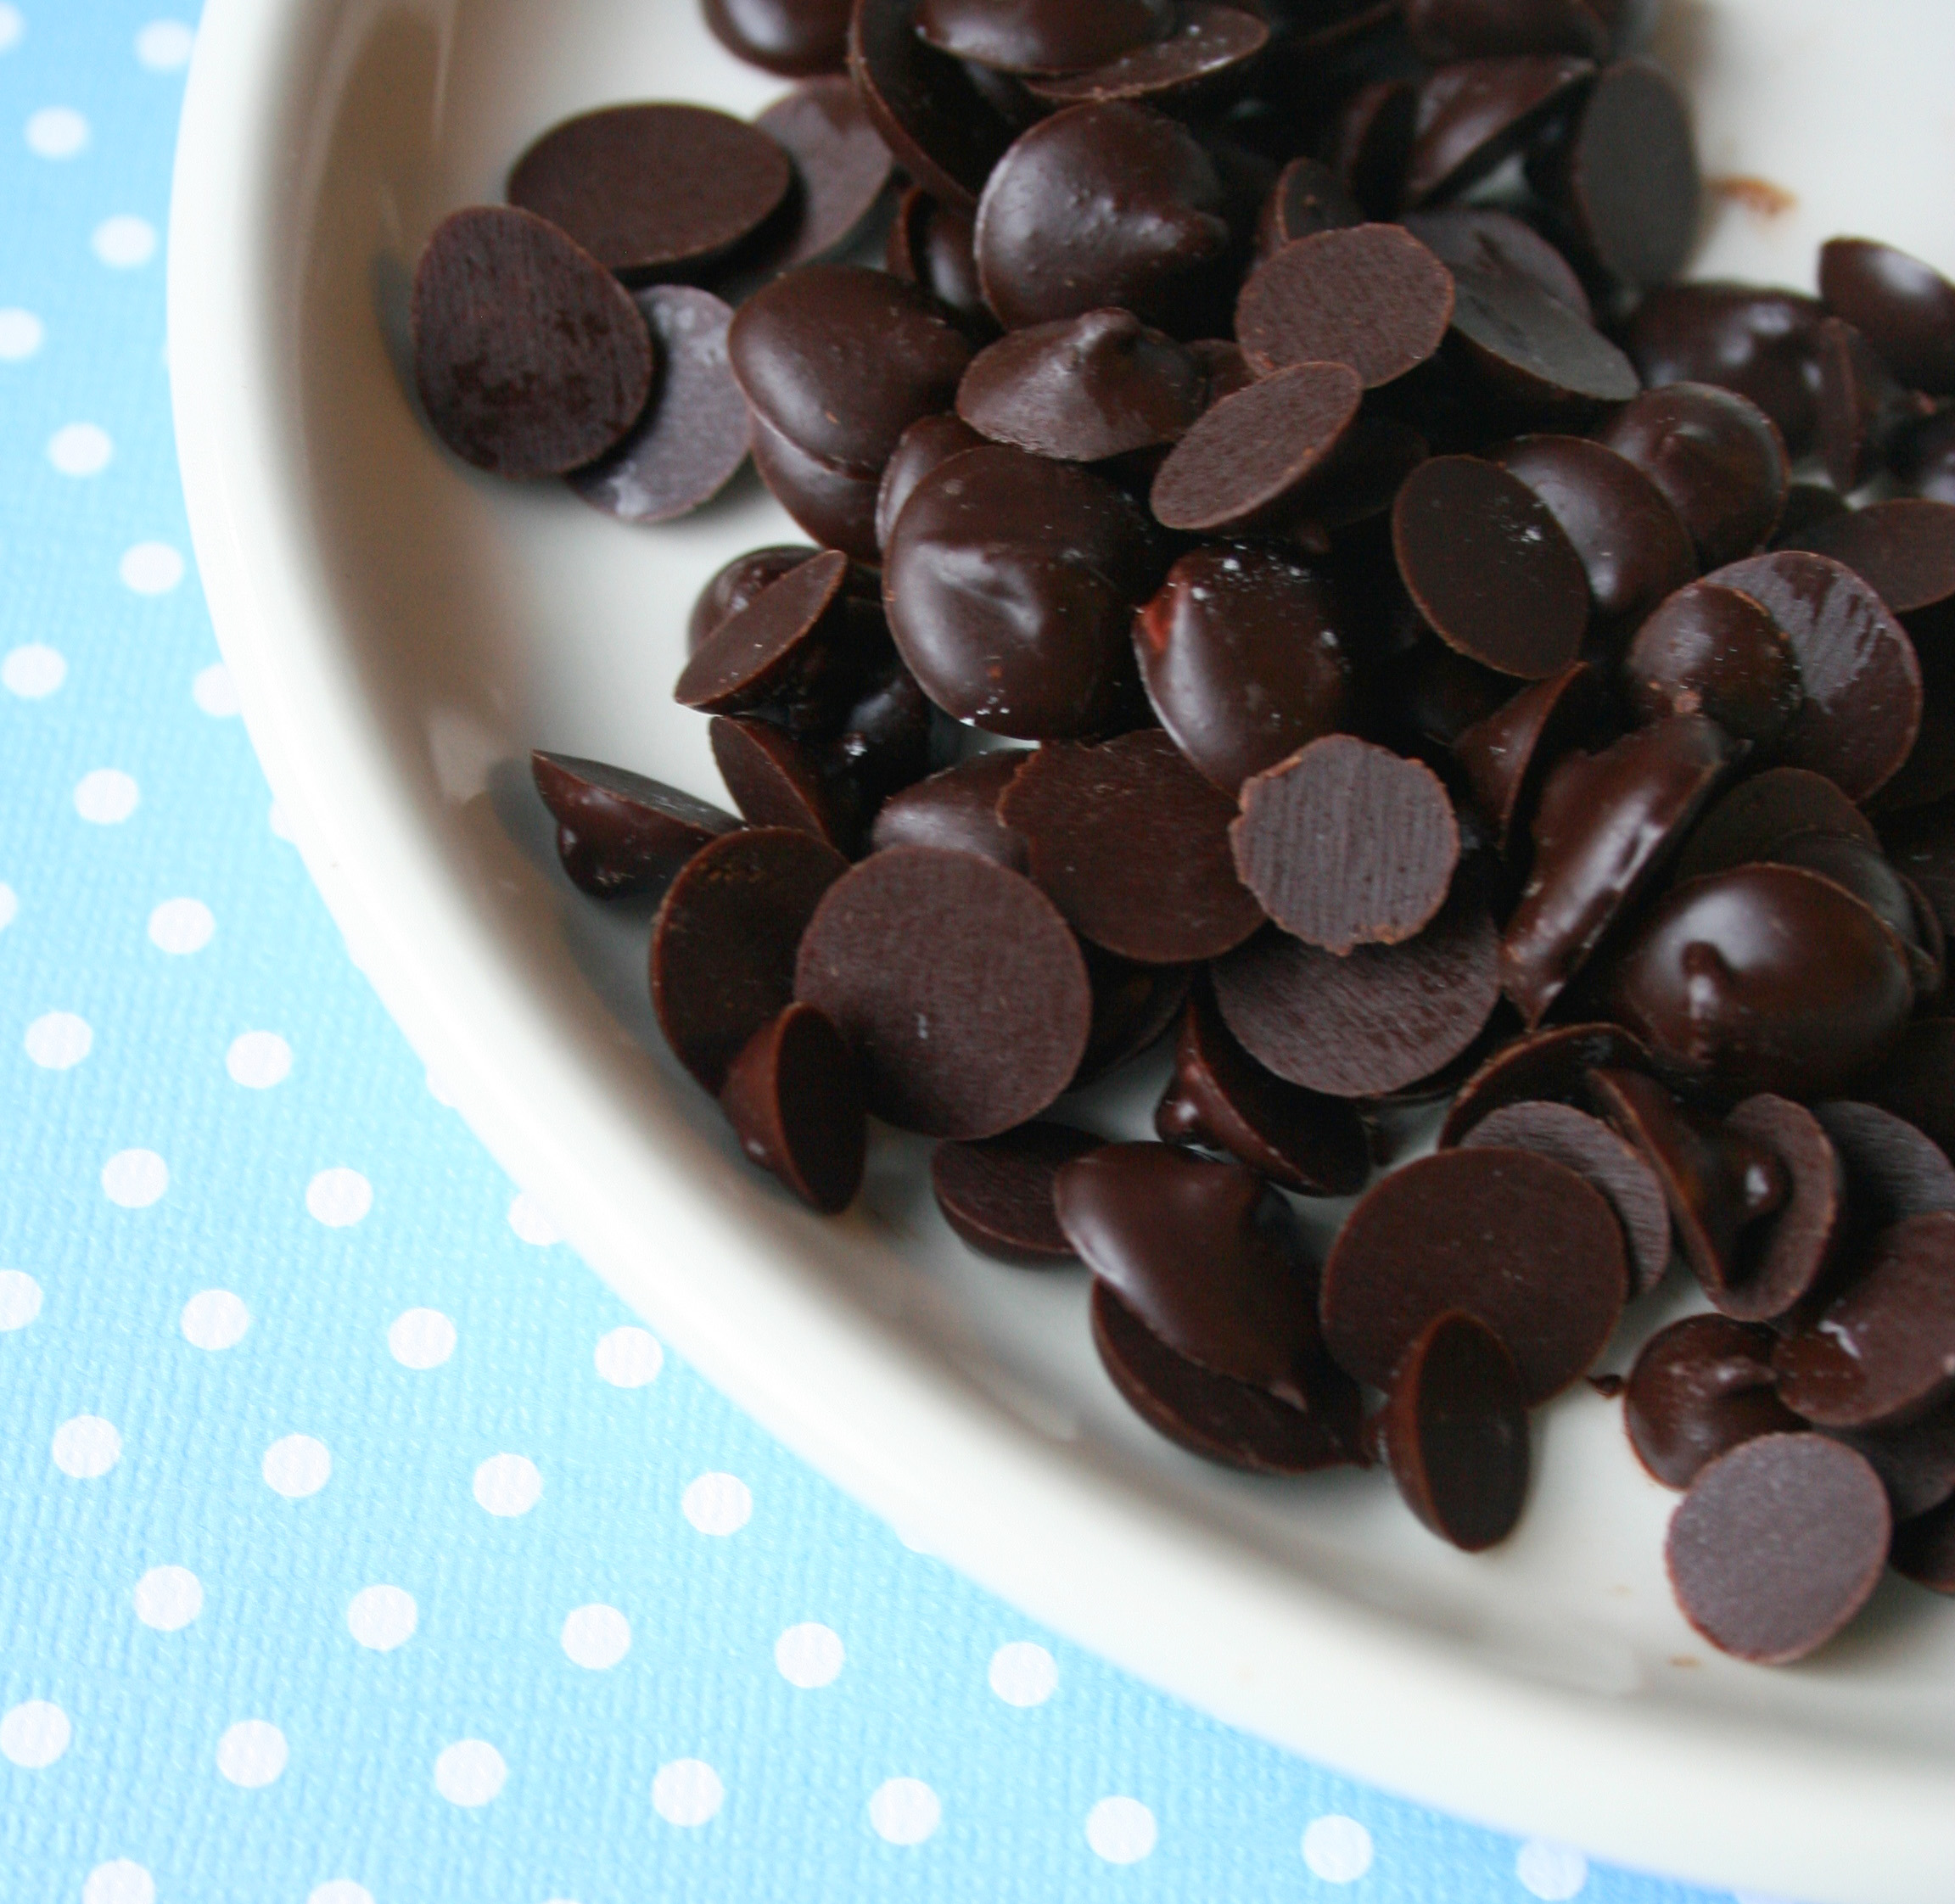 Homemade chocolate chips